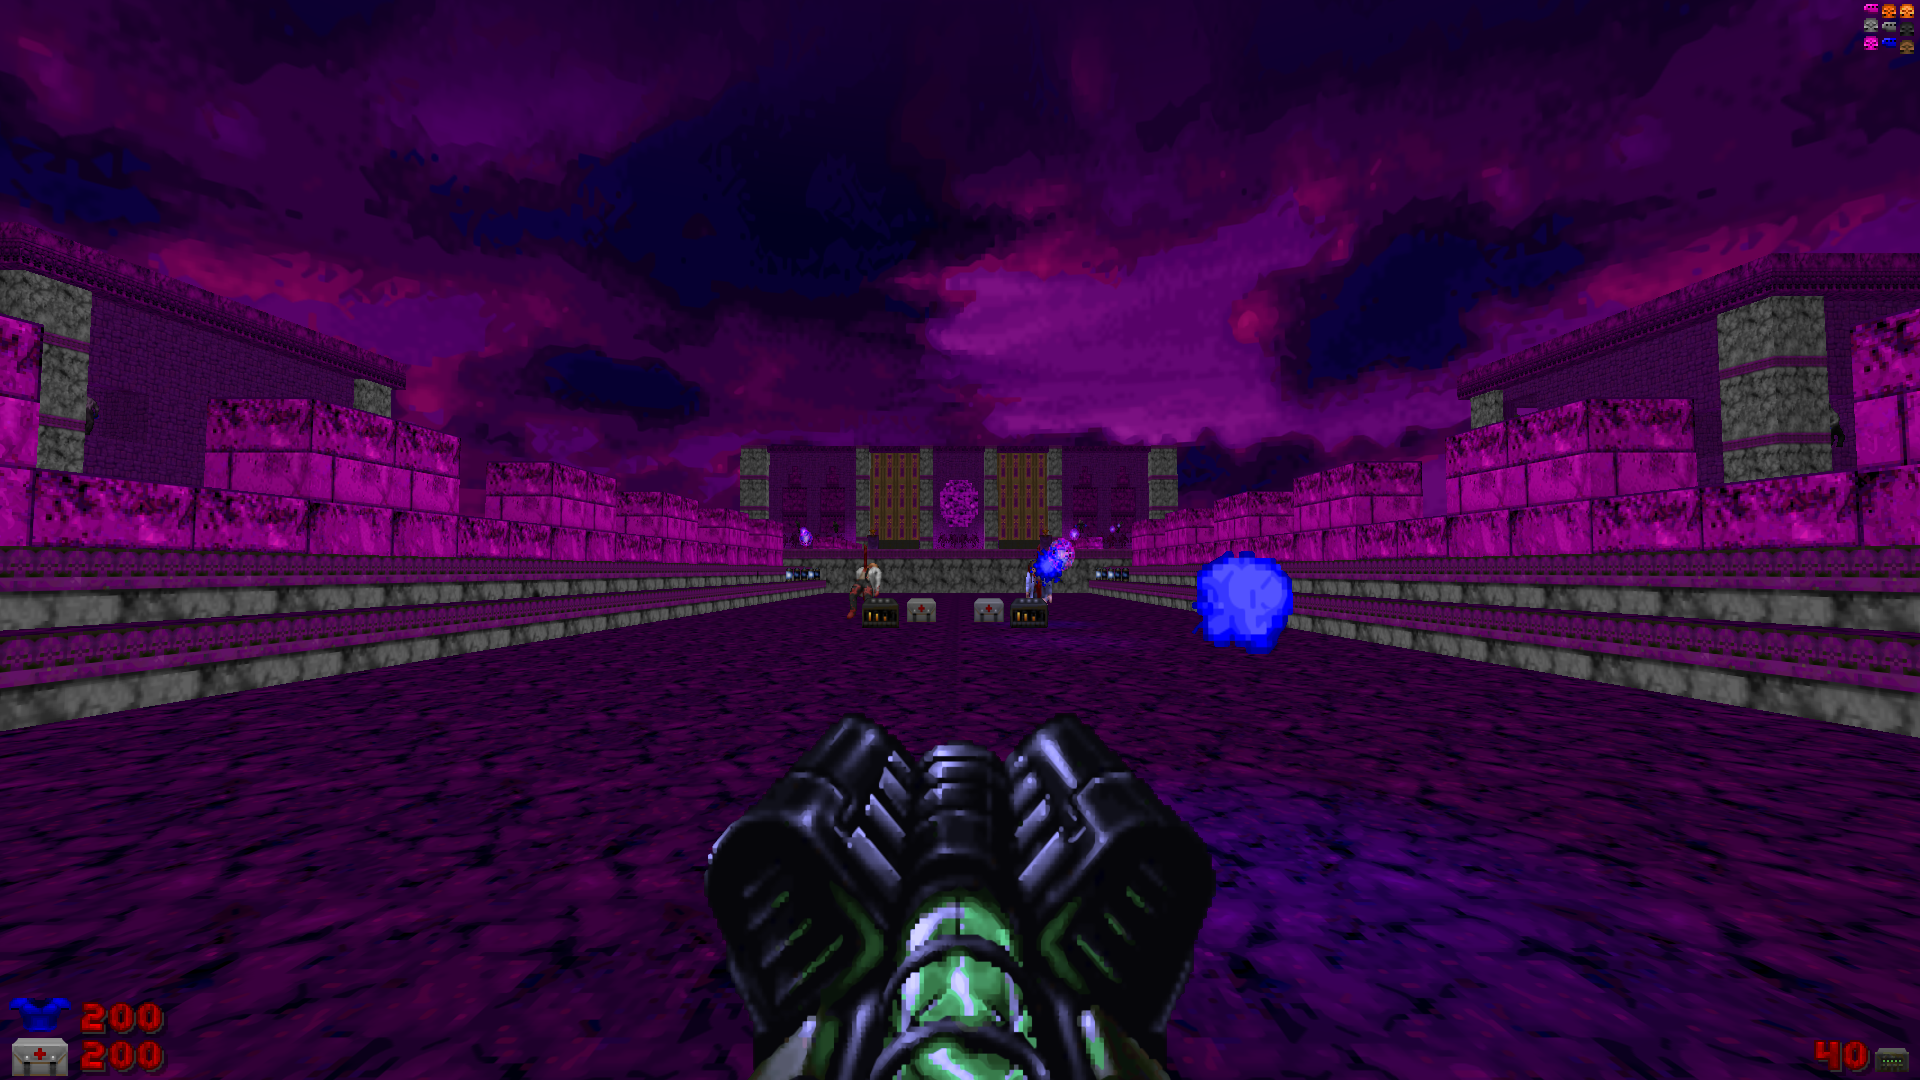 View the Mod DB Shadow Hell mod for Doom II image bridge 17.